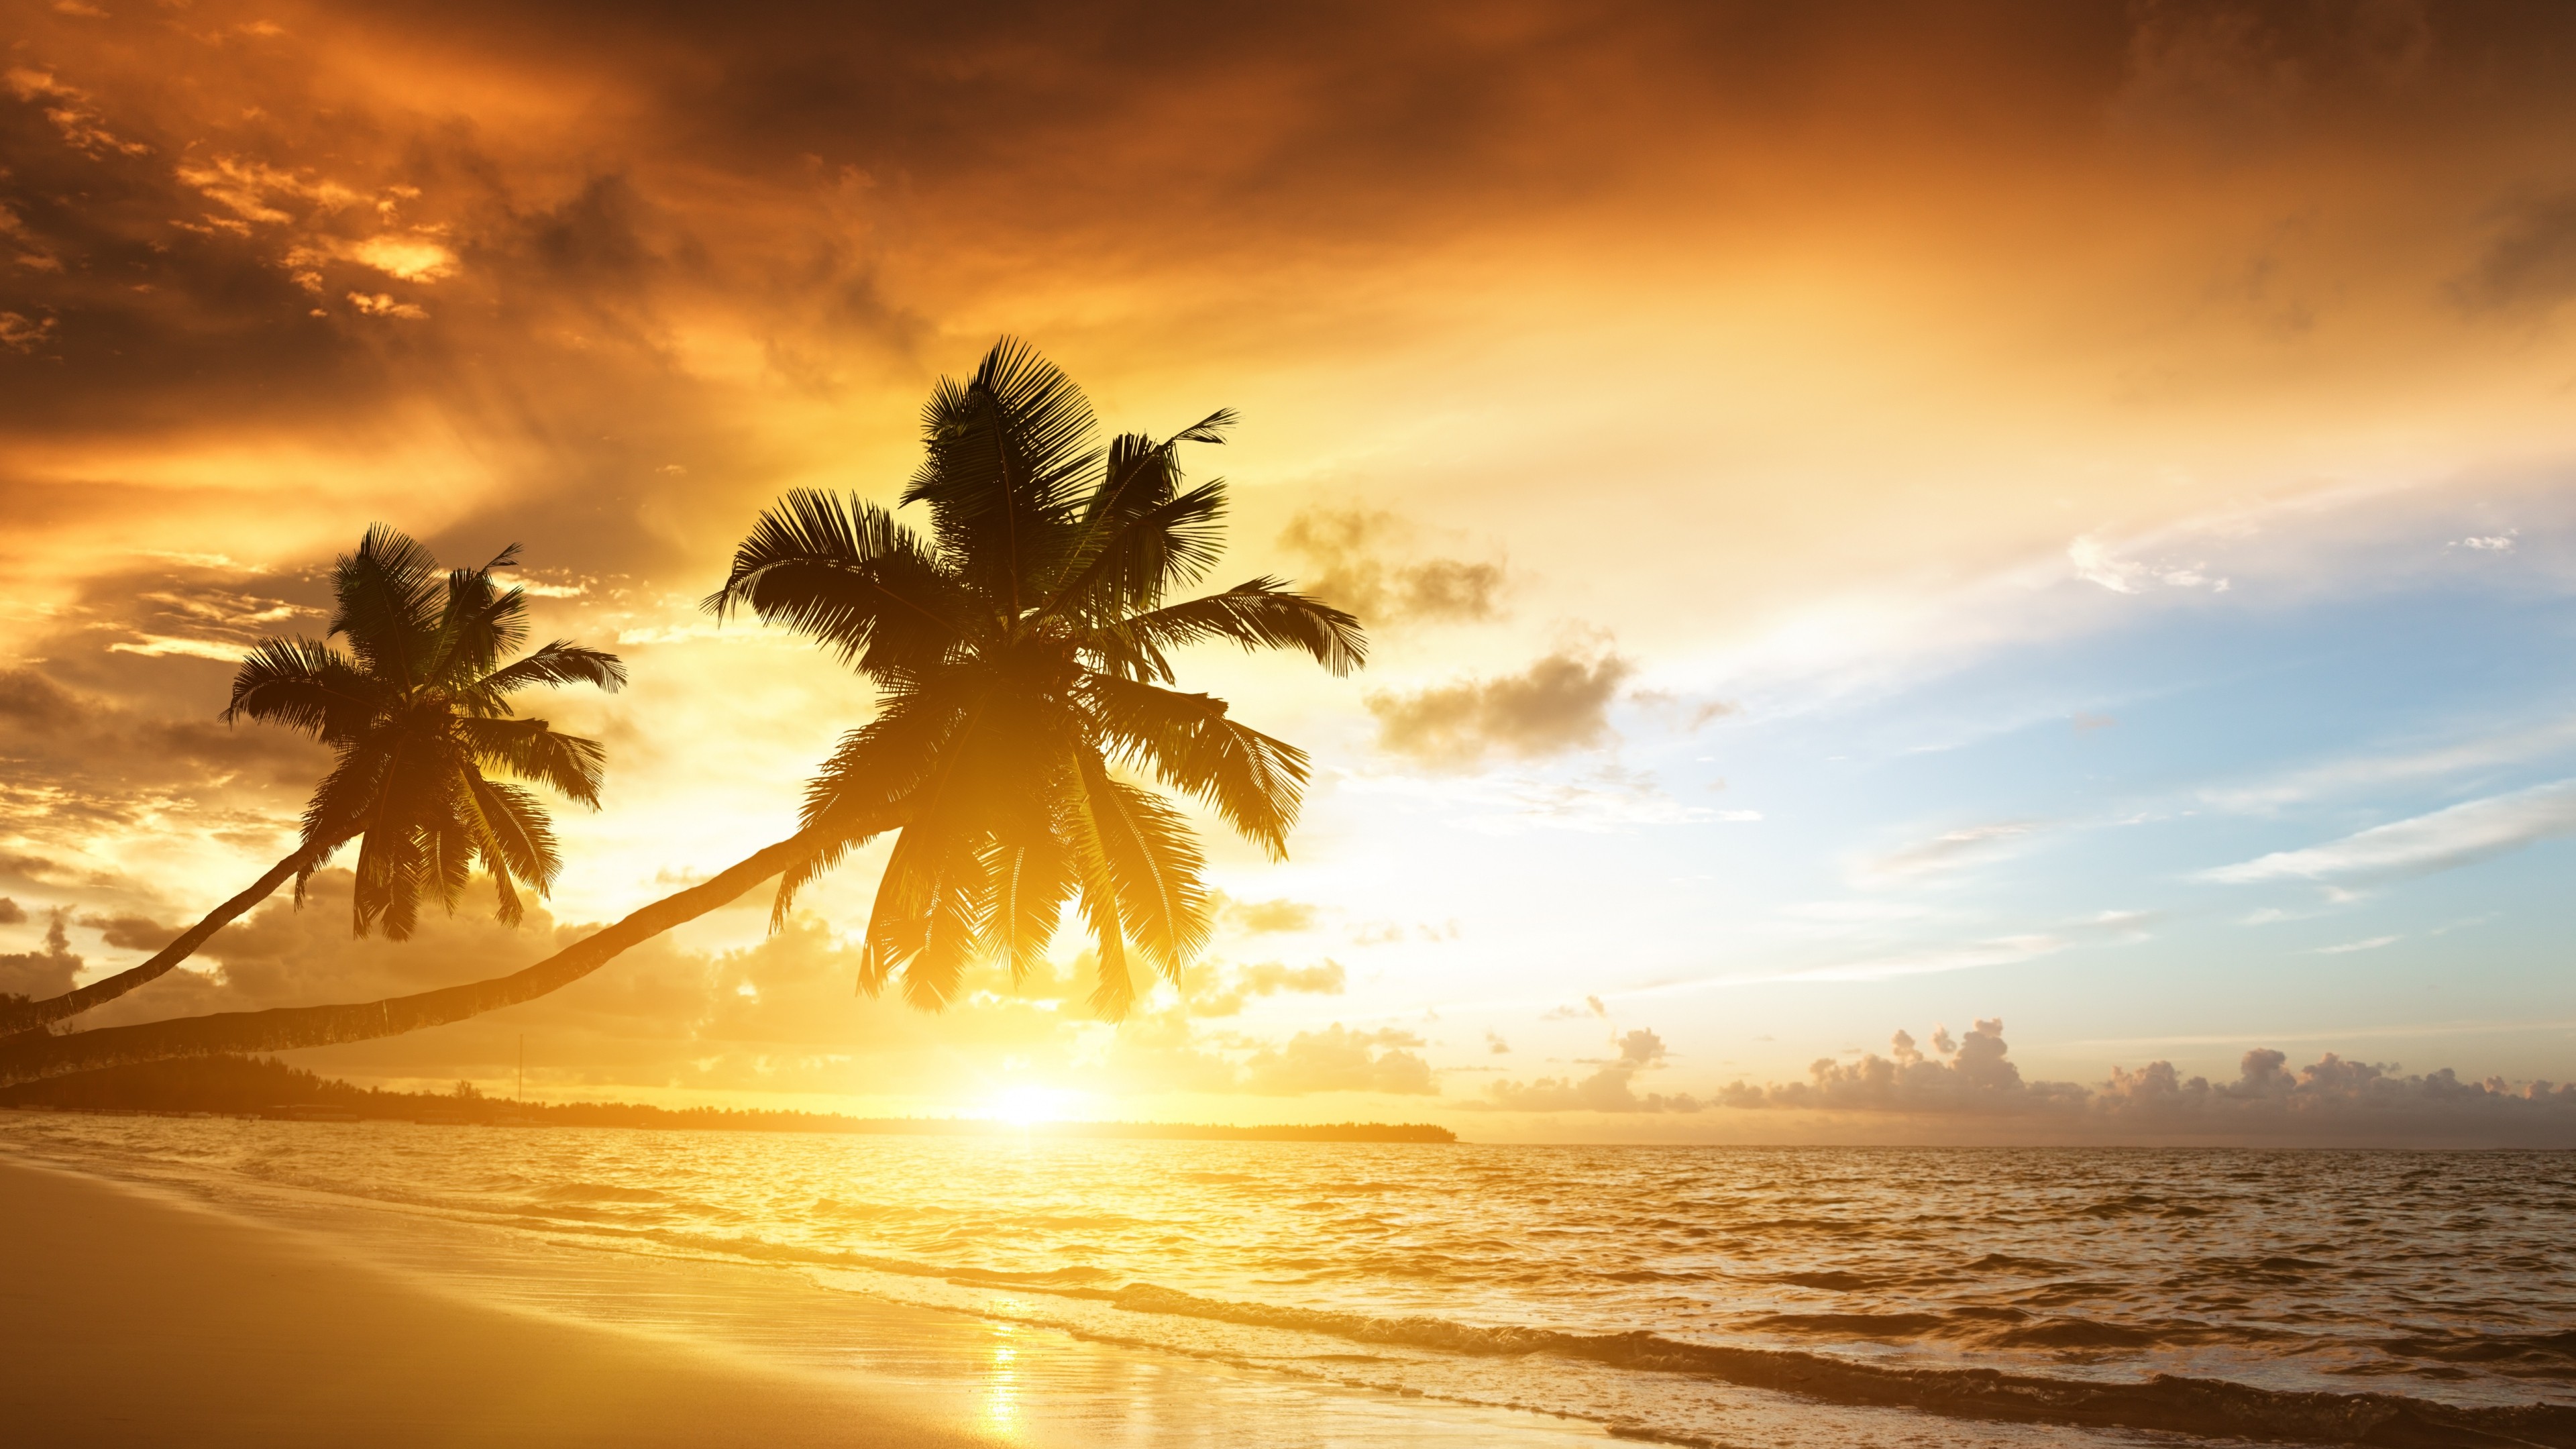 General 3840x2160 sunset beach sky clouds nature trees orange sky sea water palm trees sunlight